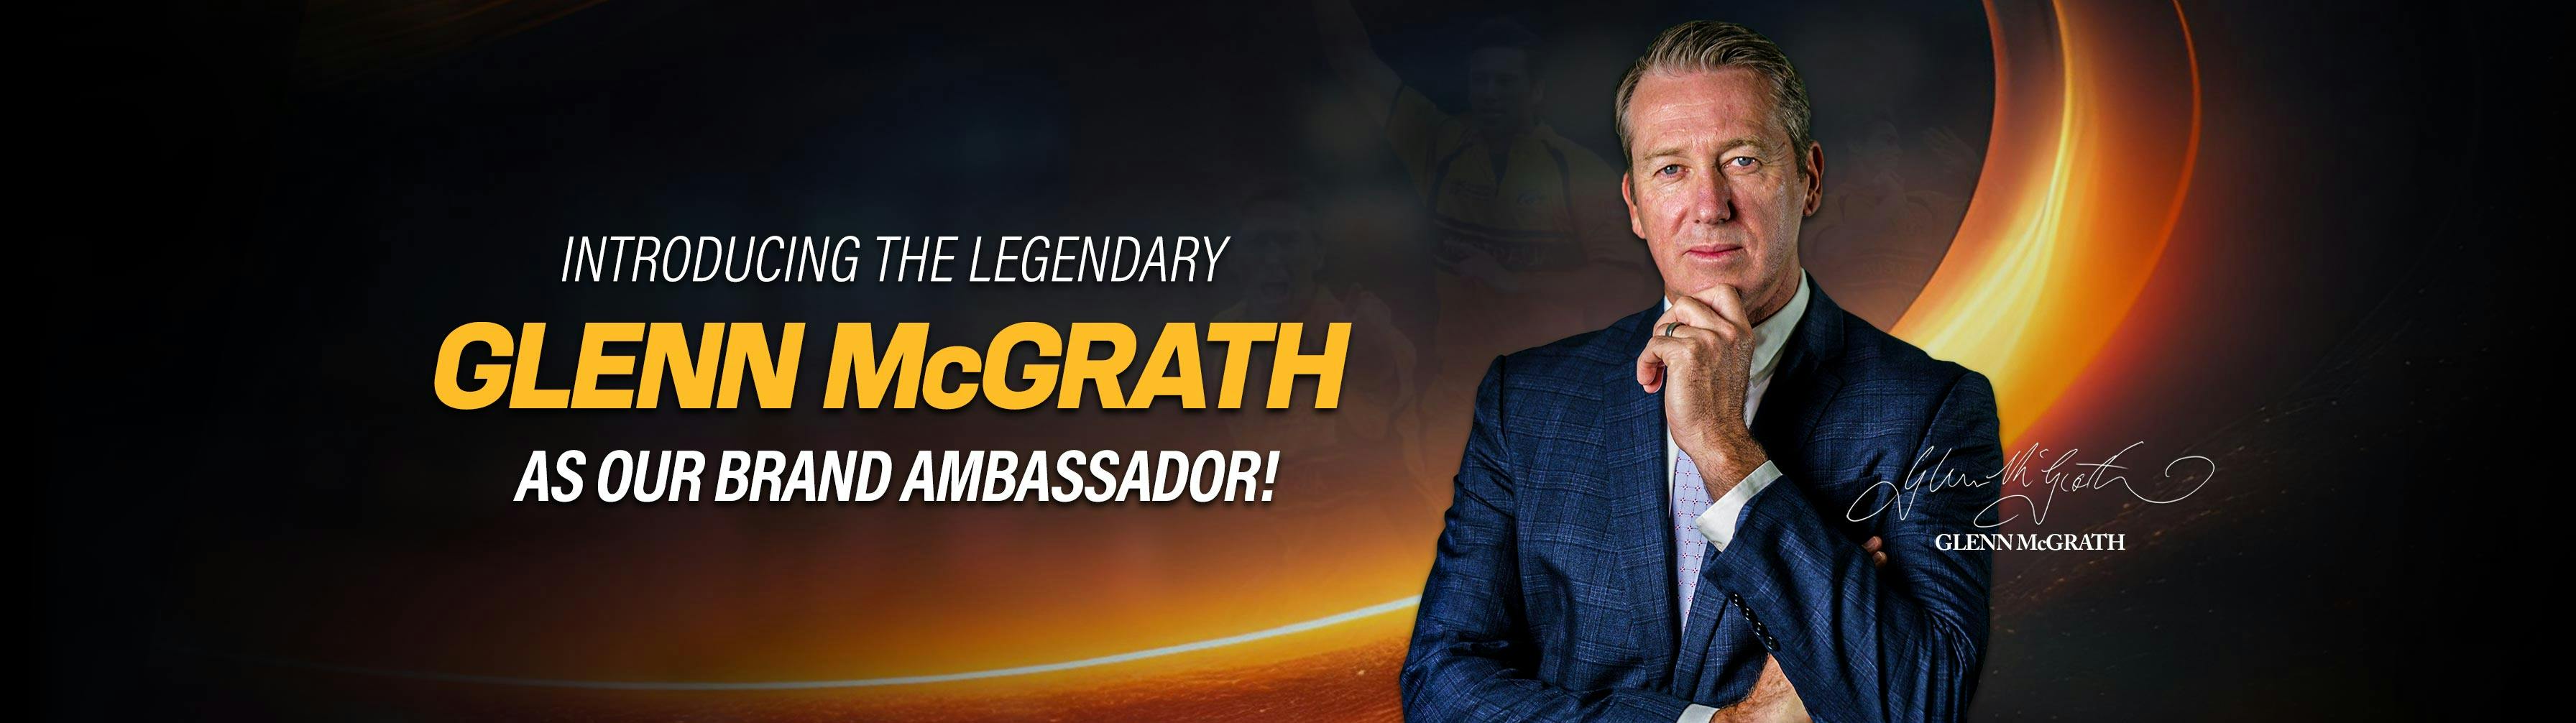 Introducing the Legendary Glenn McGrath as Our Brand Ambassador